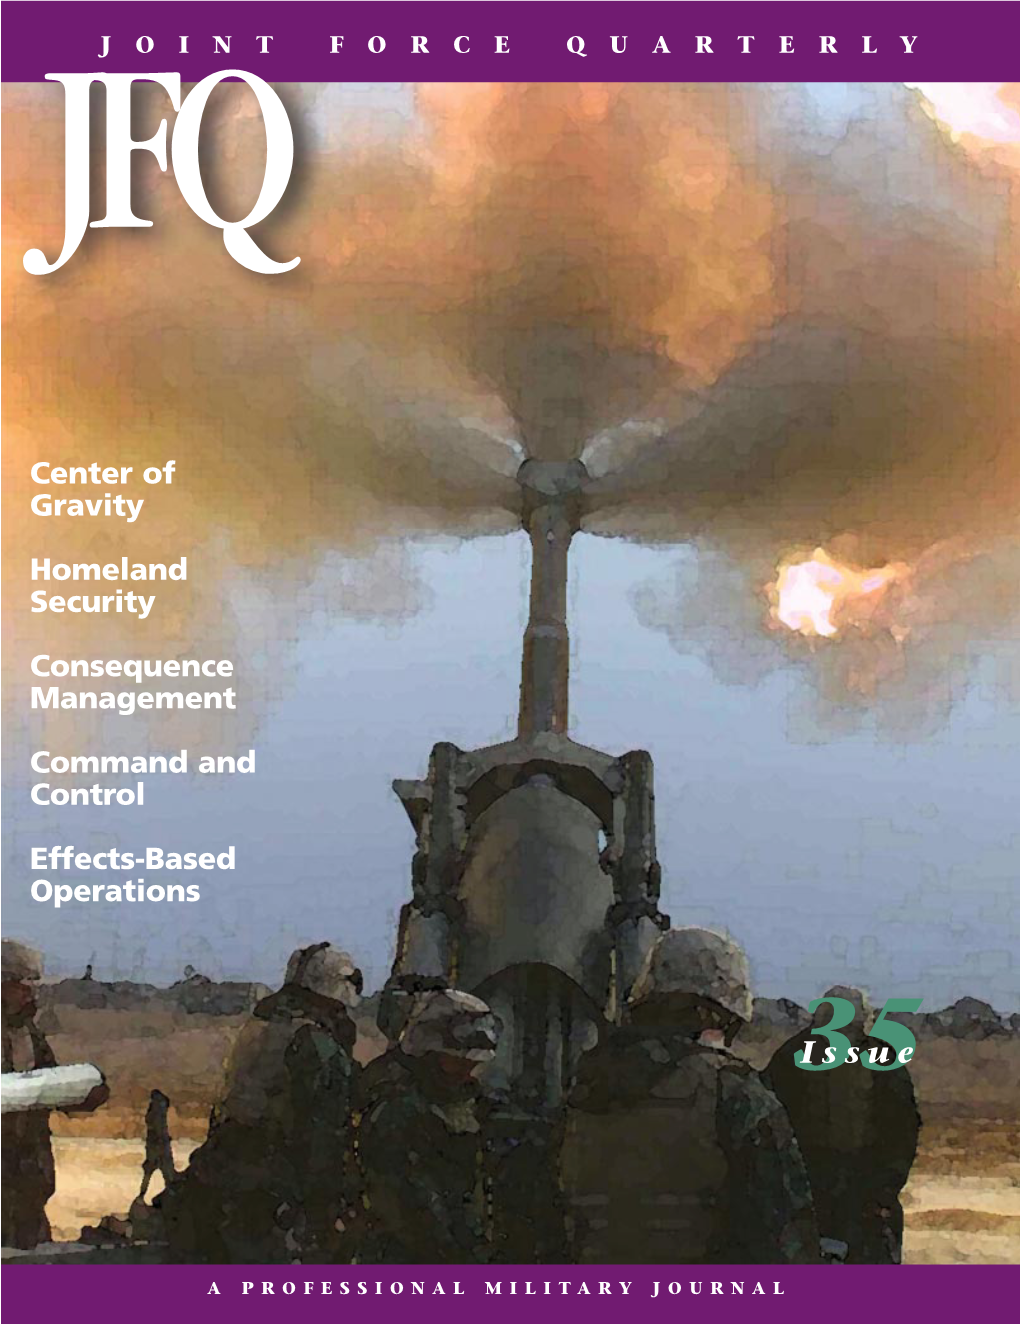 Jfqjoint Force Quarterly